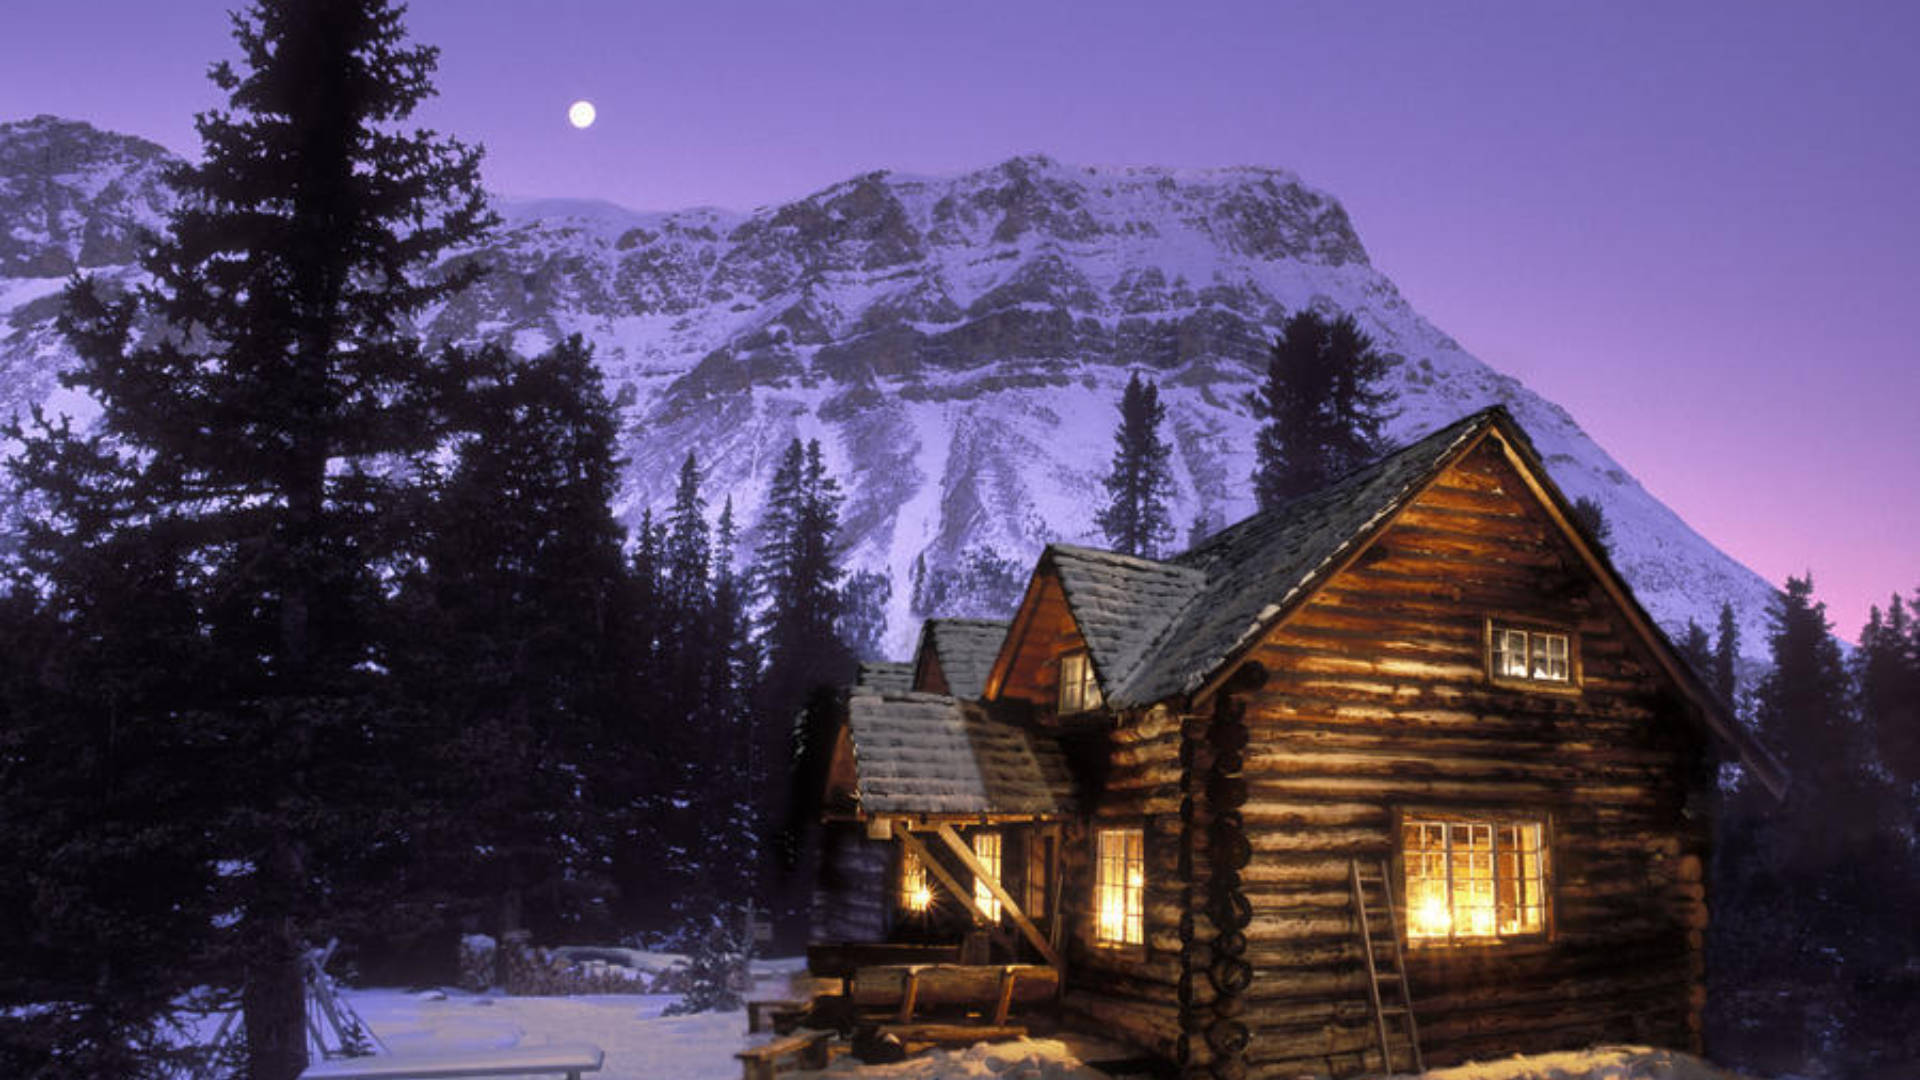 Enchanting Snowy Retreat - Cozy Winter Cabin Wallpaper